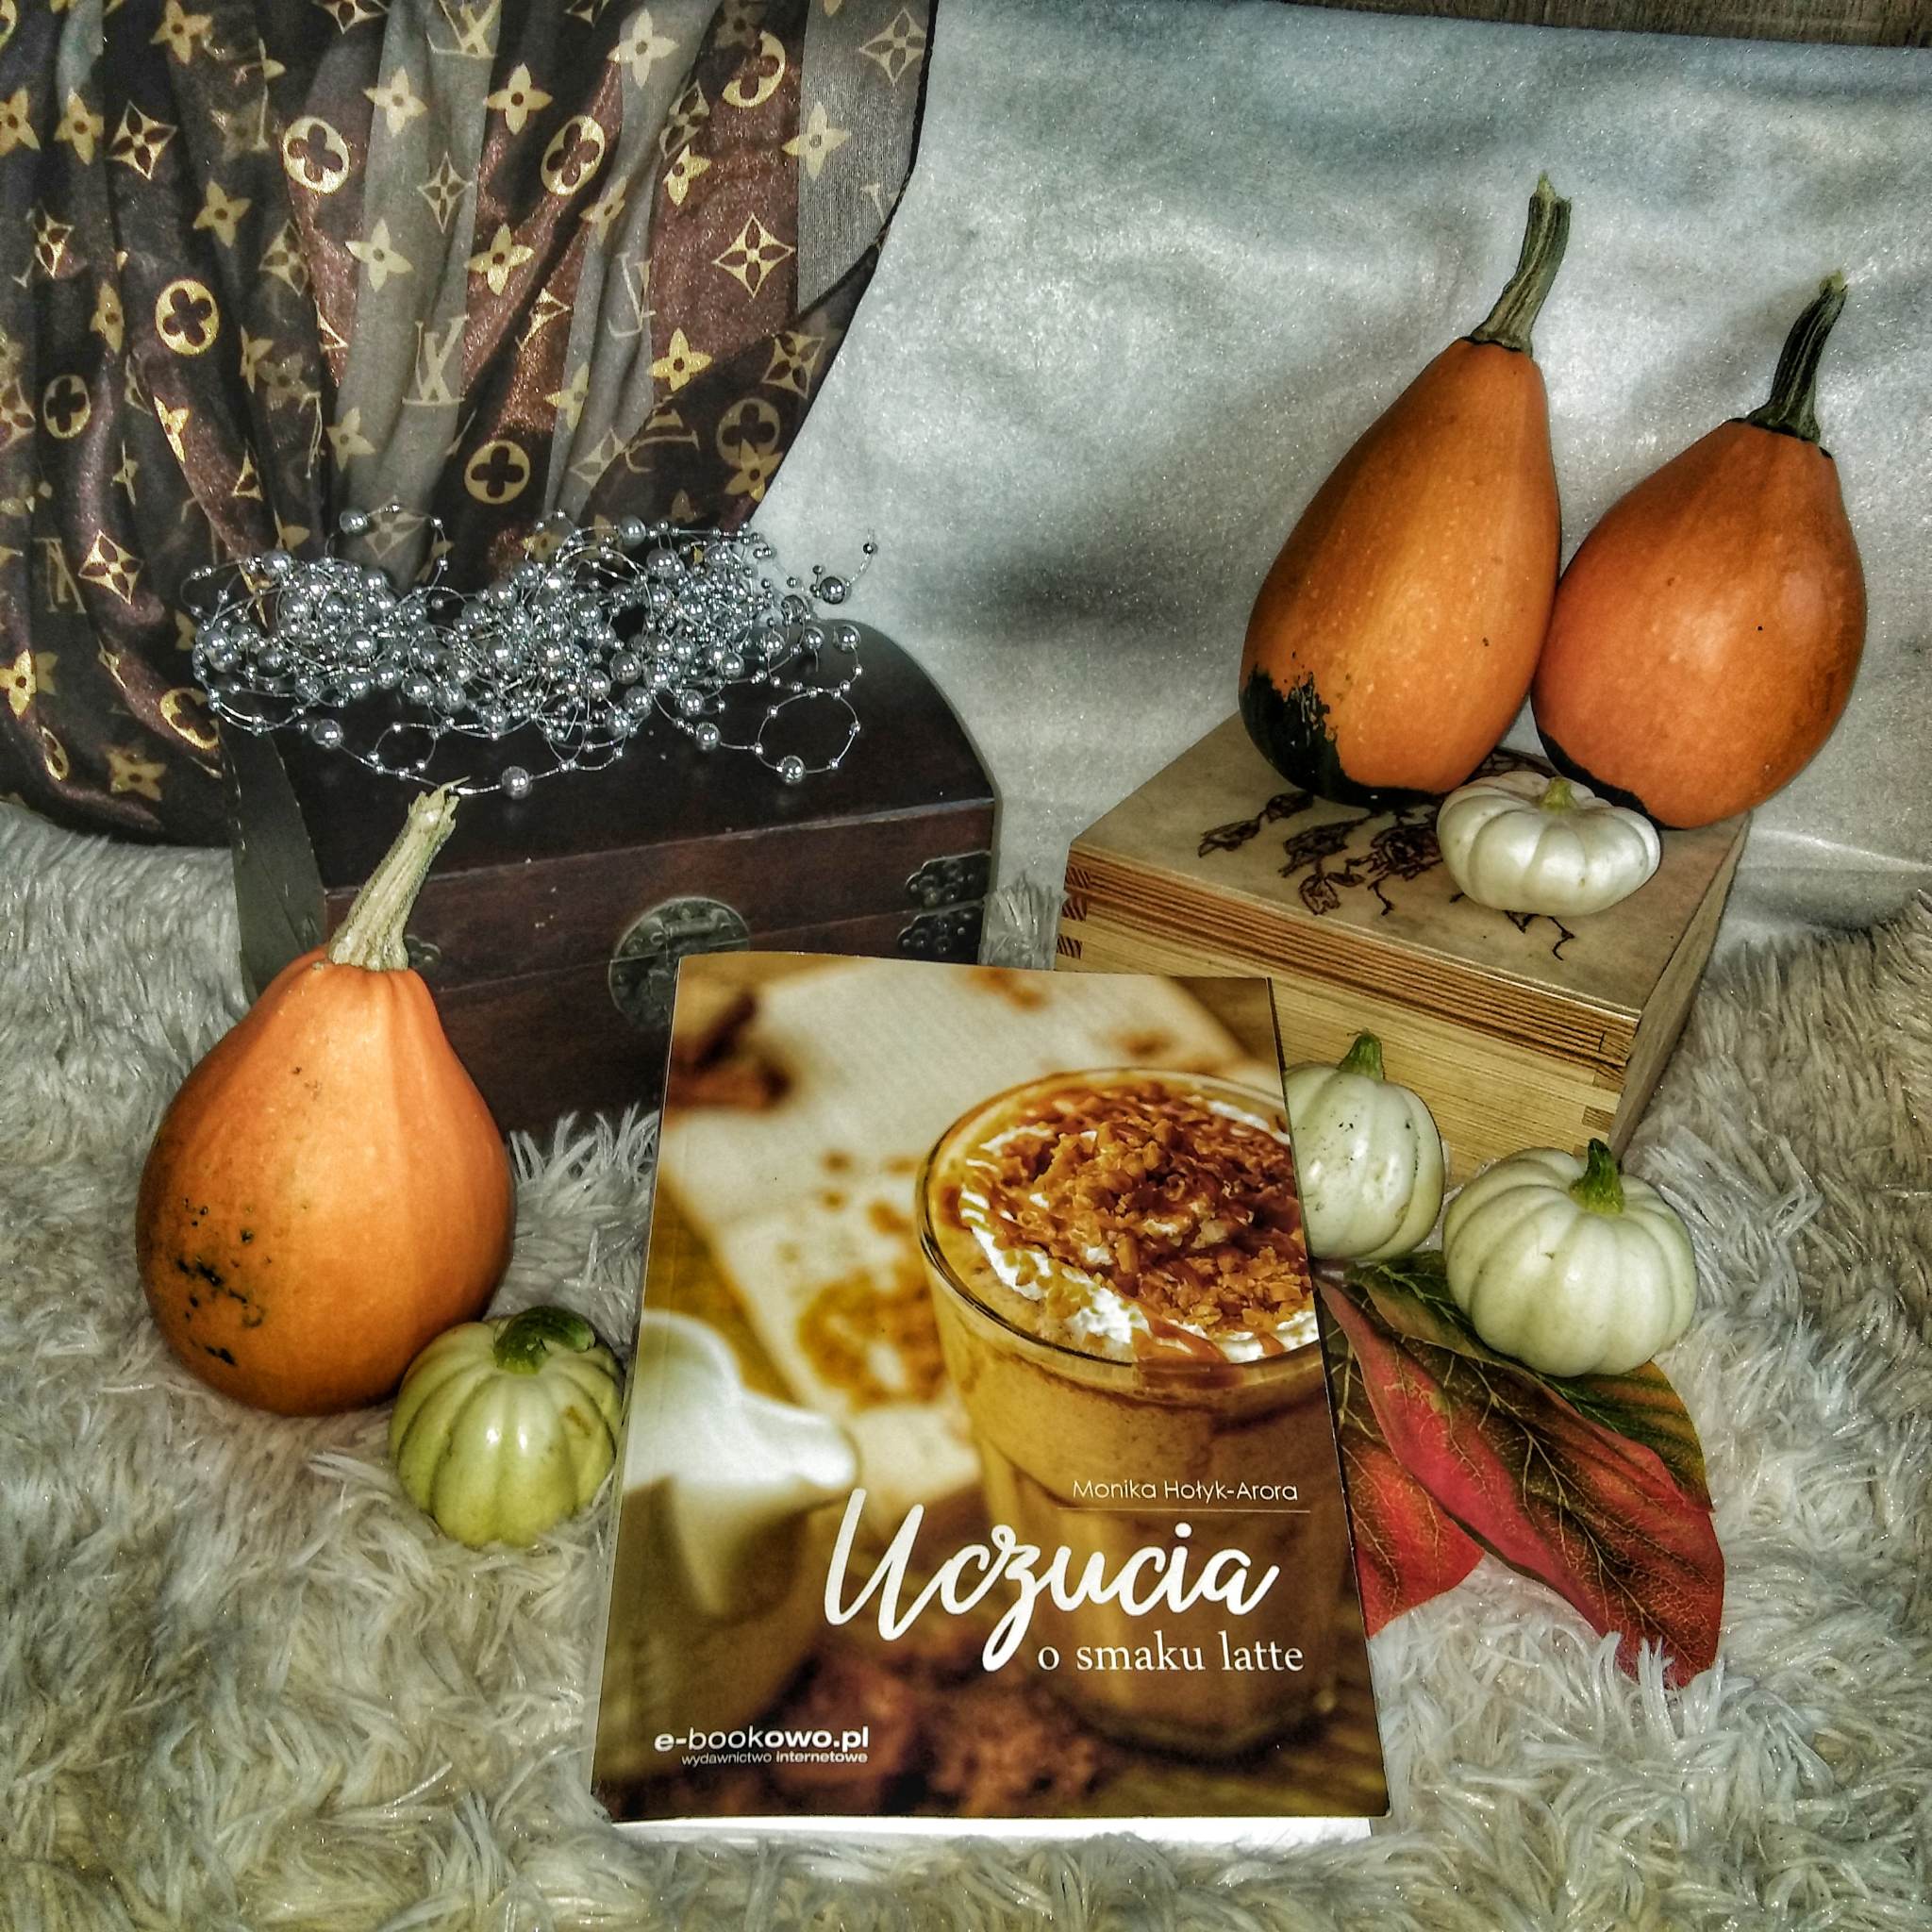 You are currently viewing Uczucia o smaku latte Monika Hołyk-Arora [Book Tour]